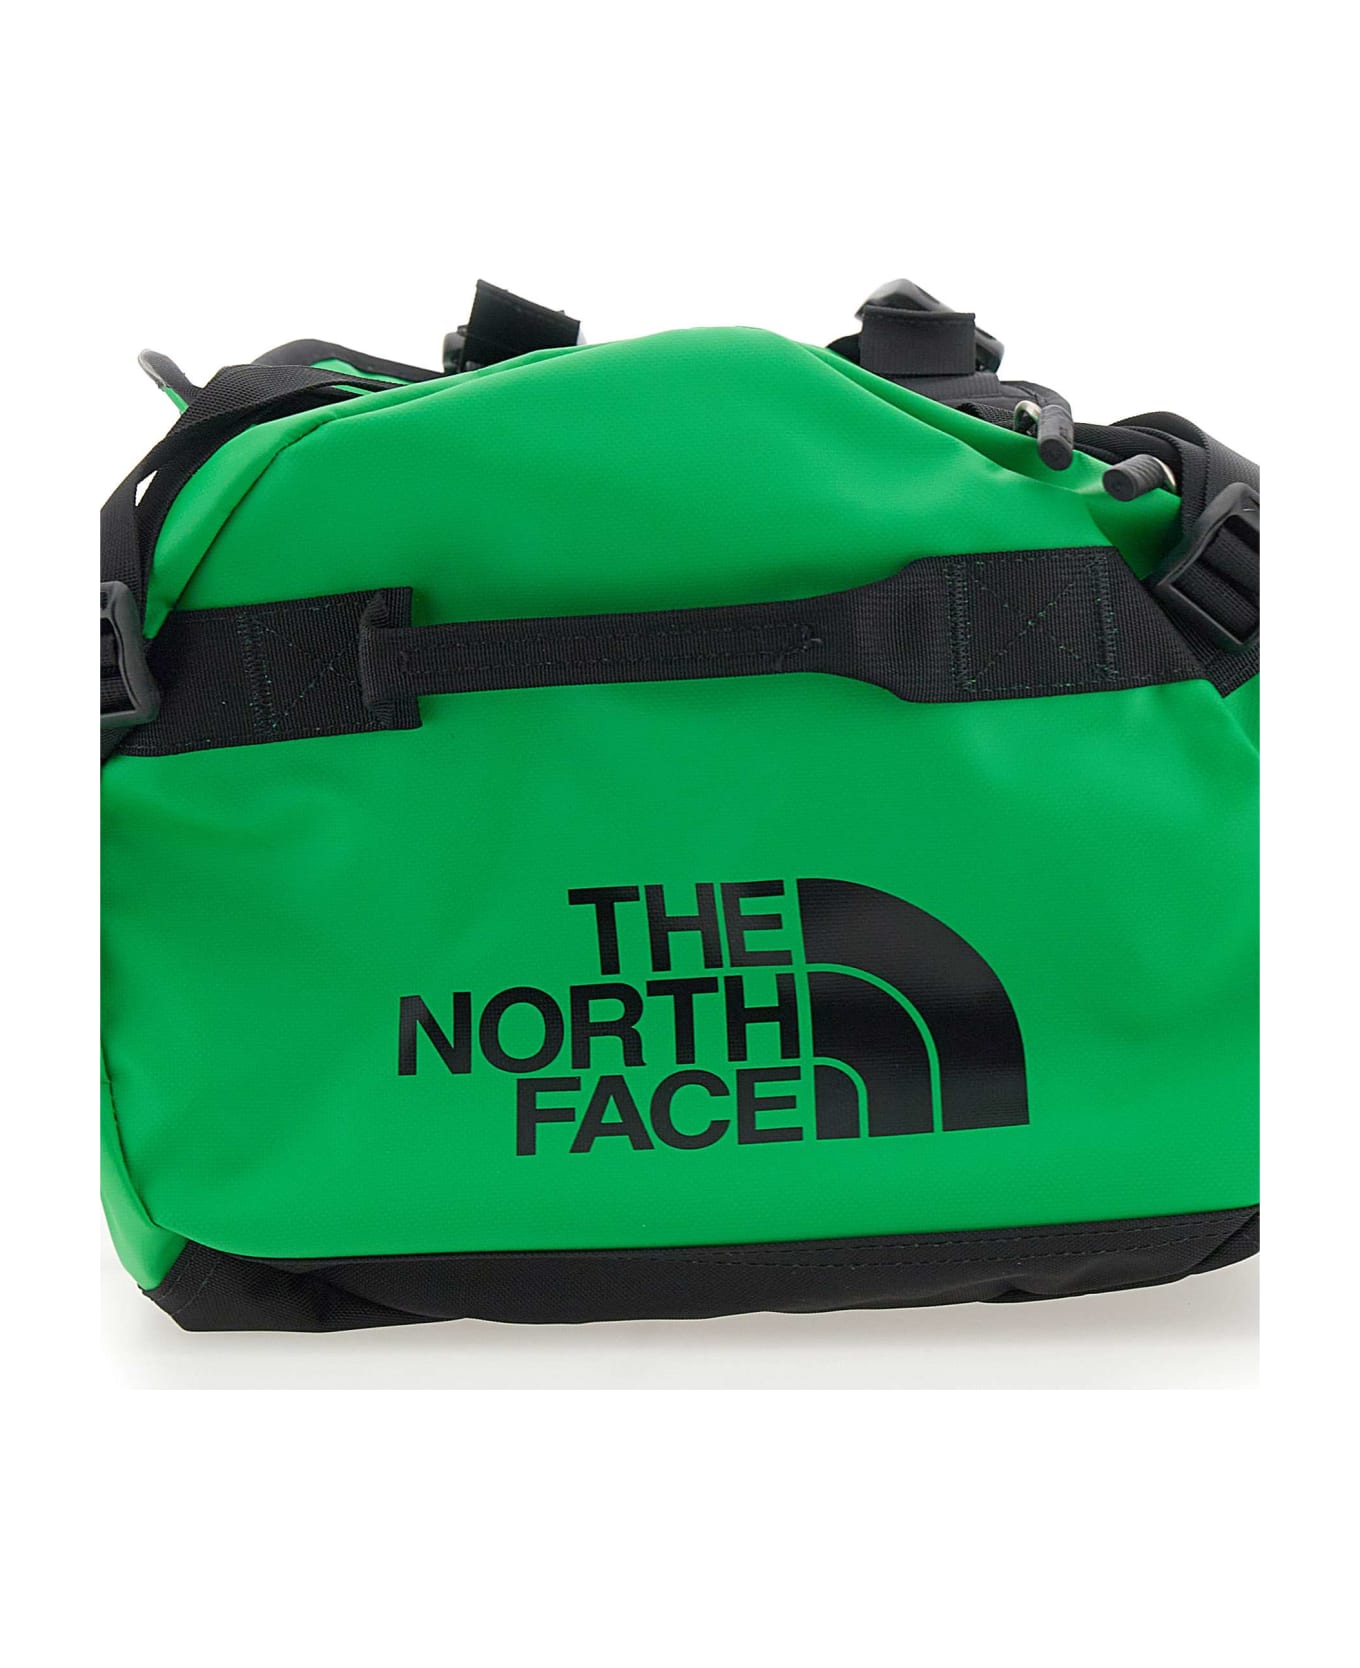 The North Face "base Camp Duffel" Travel Bag - black/green